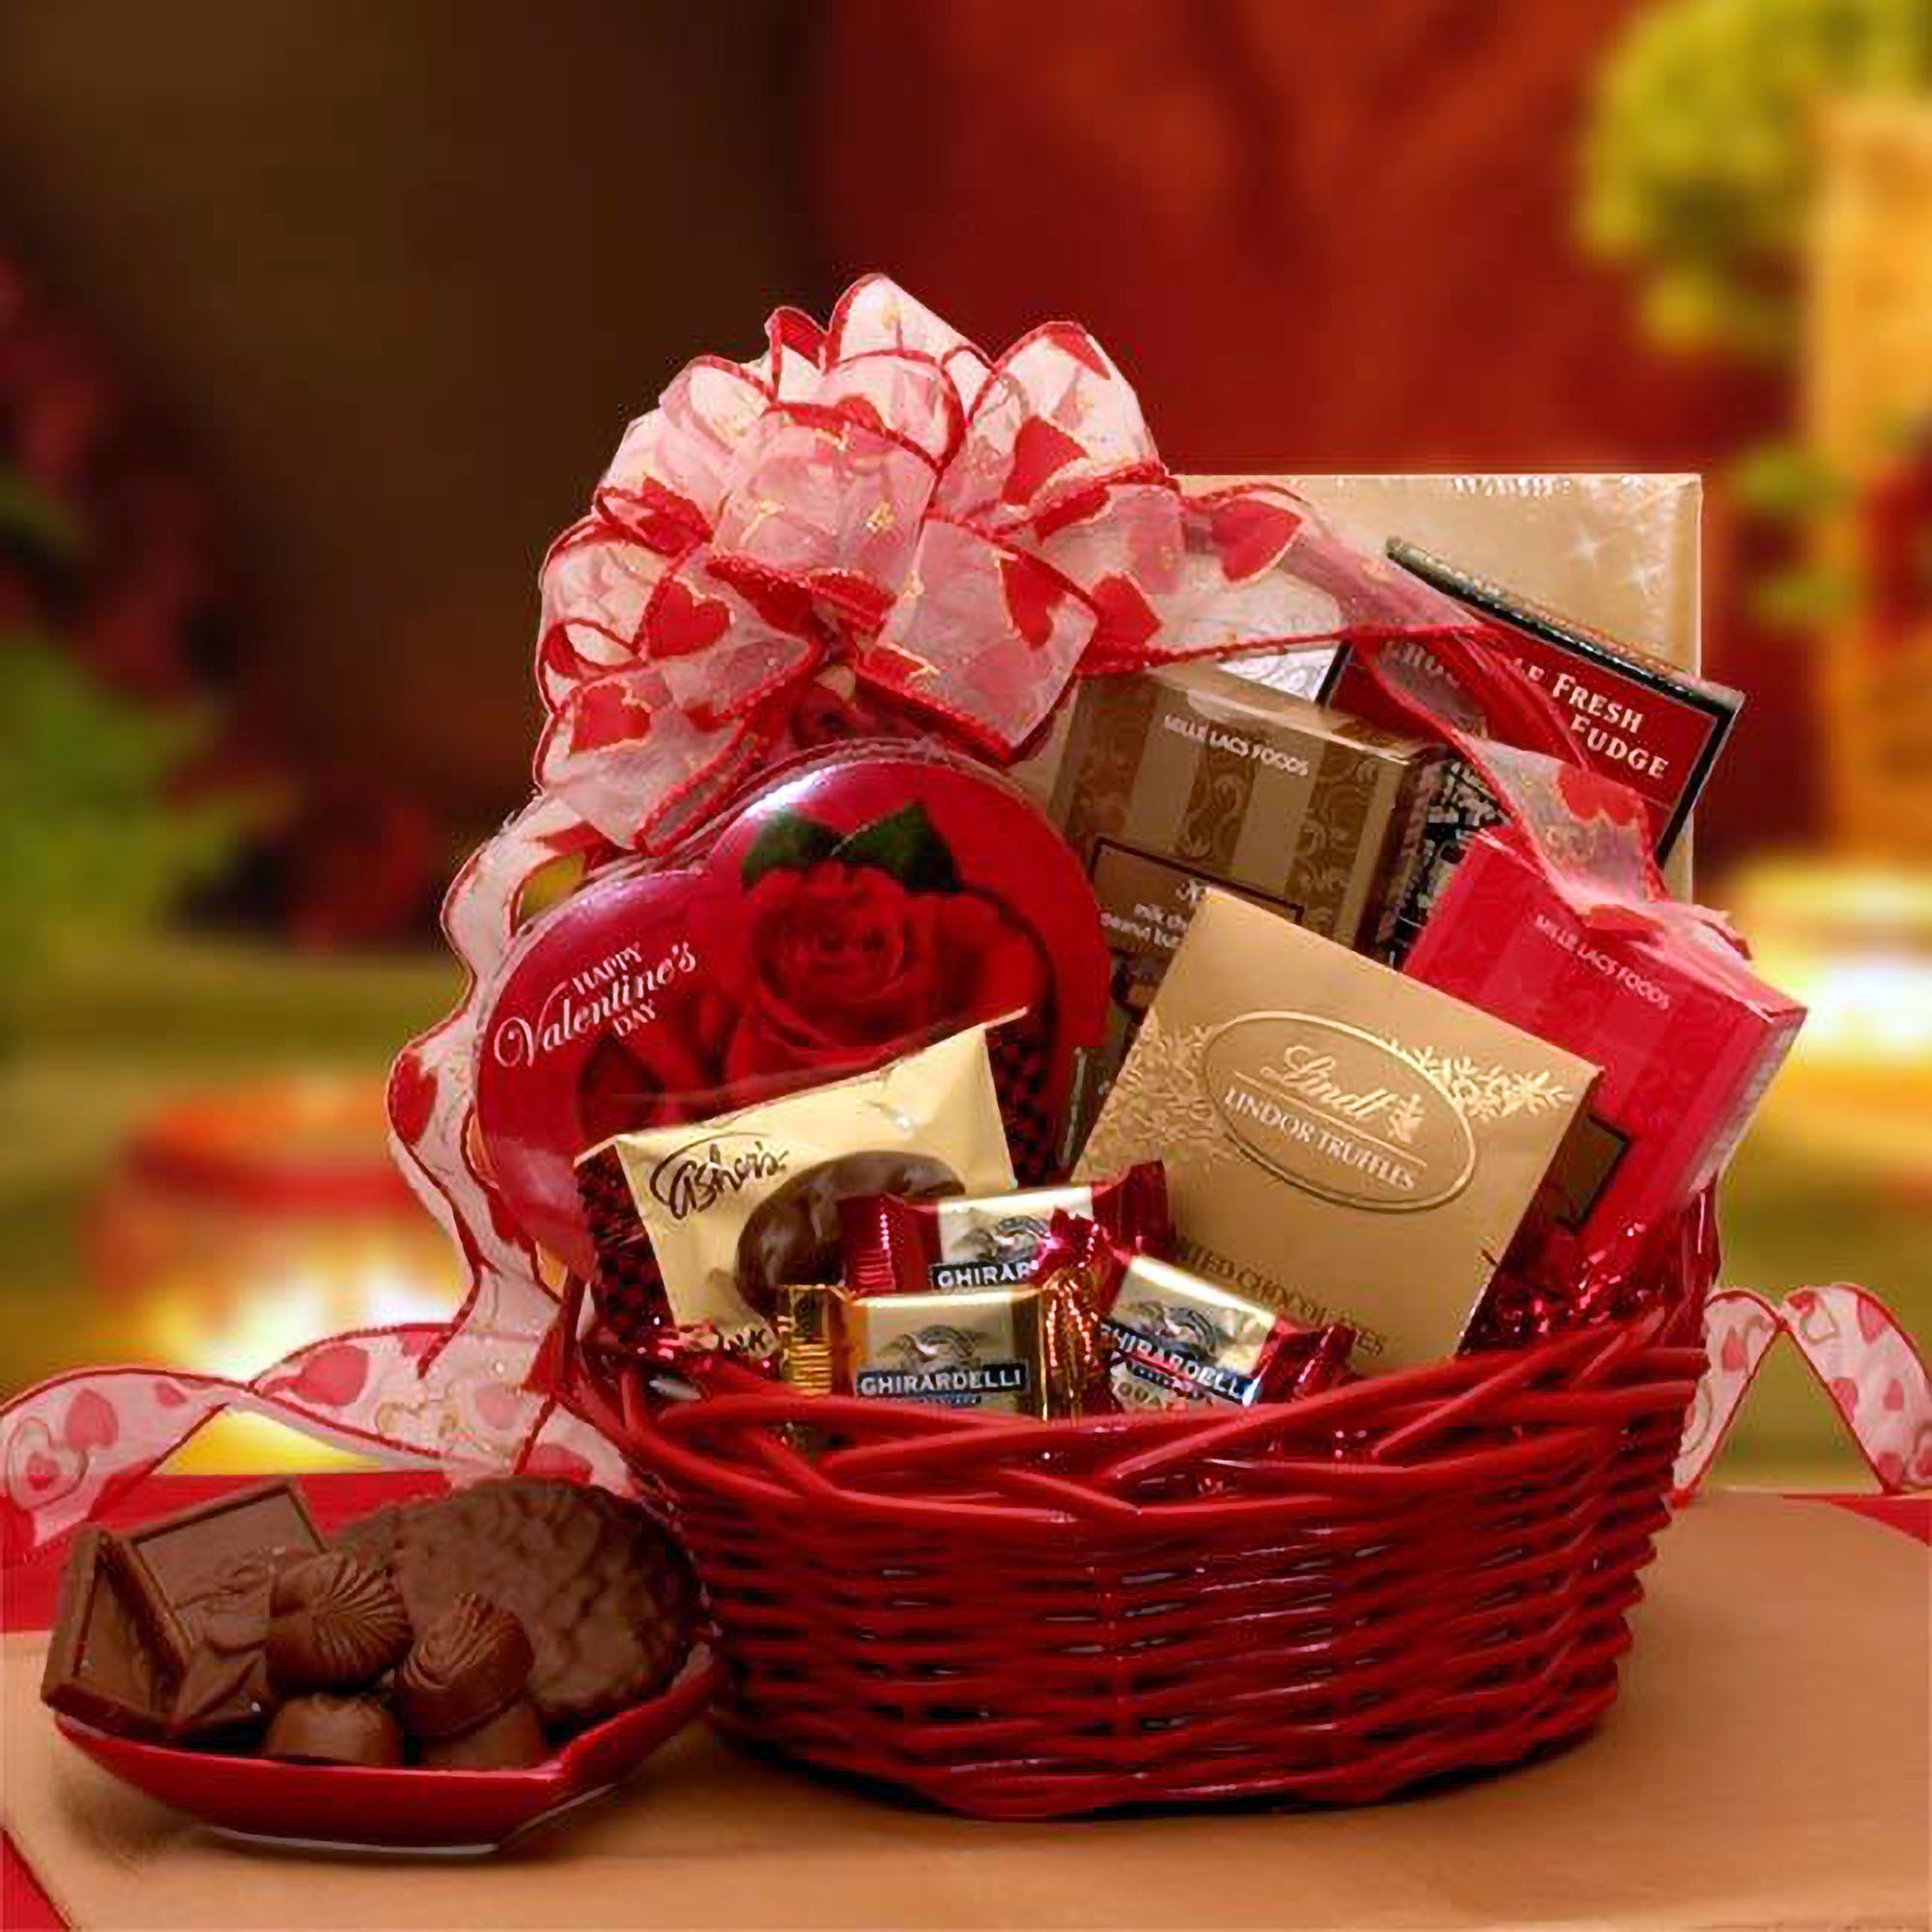 Gift Baskets Chocolate Inspirations Valentine Gift Basket